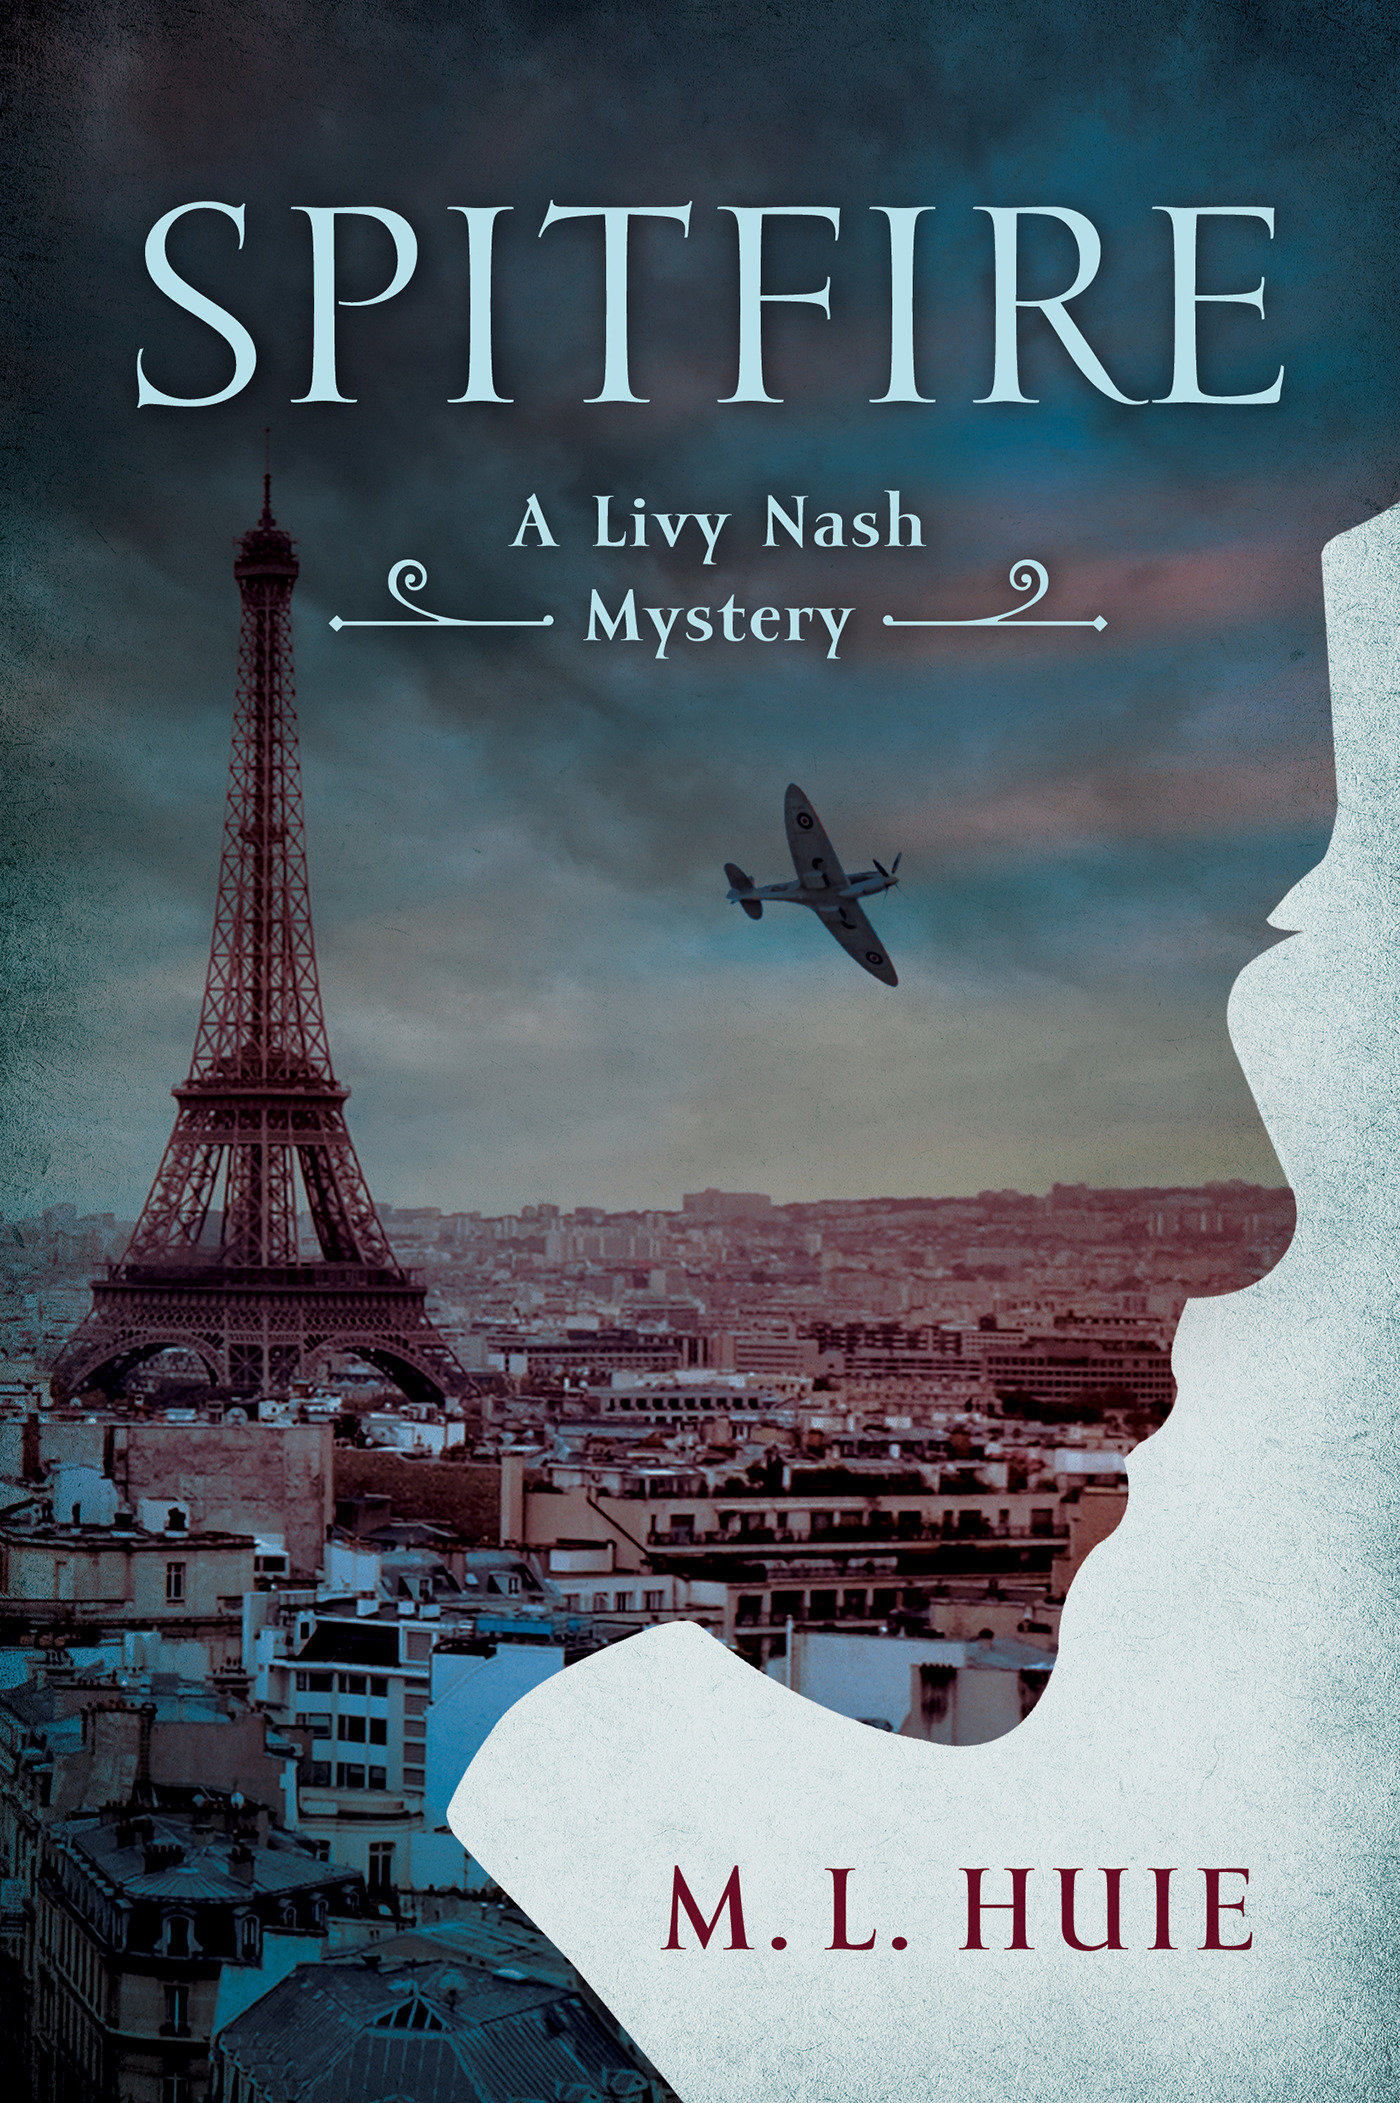 Spitfire A Livy Nash Mystery cover image